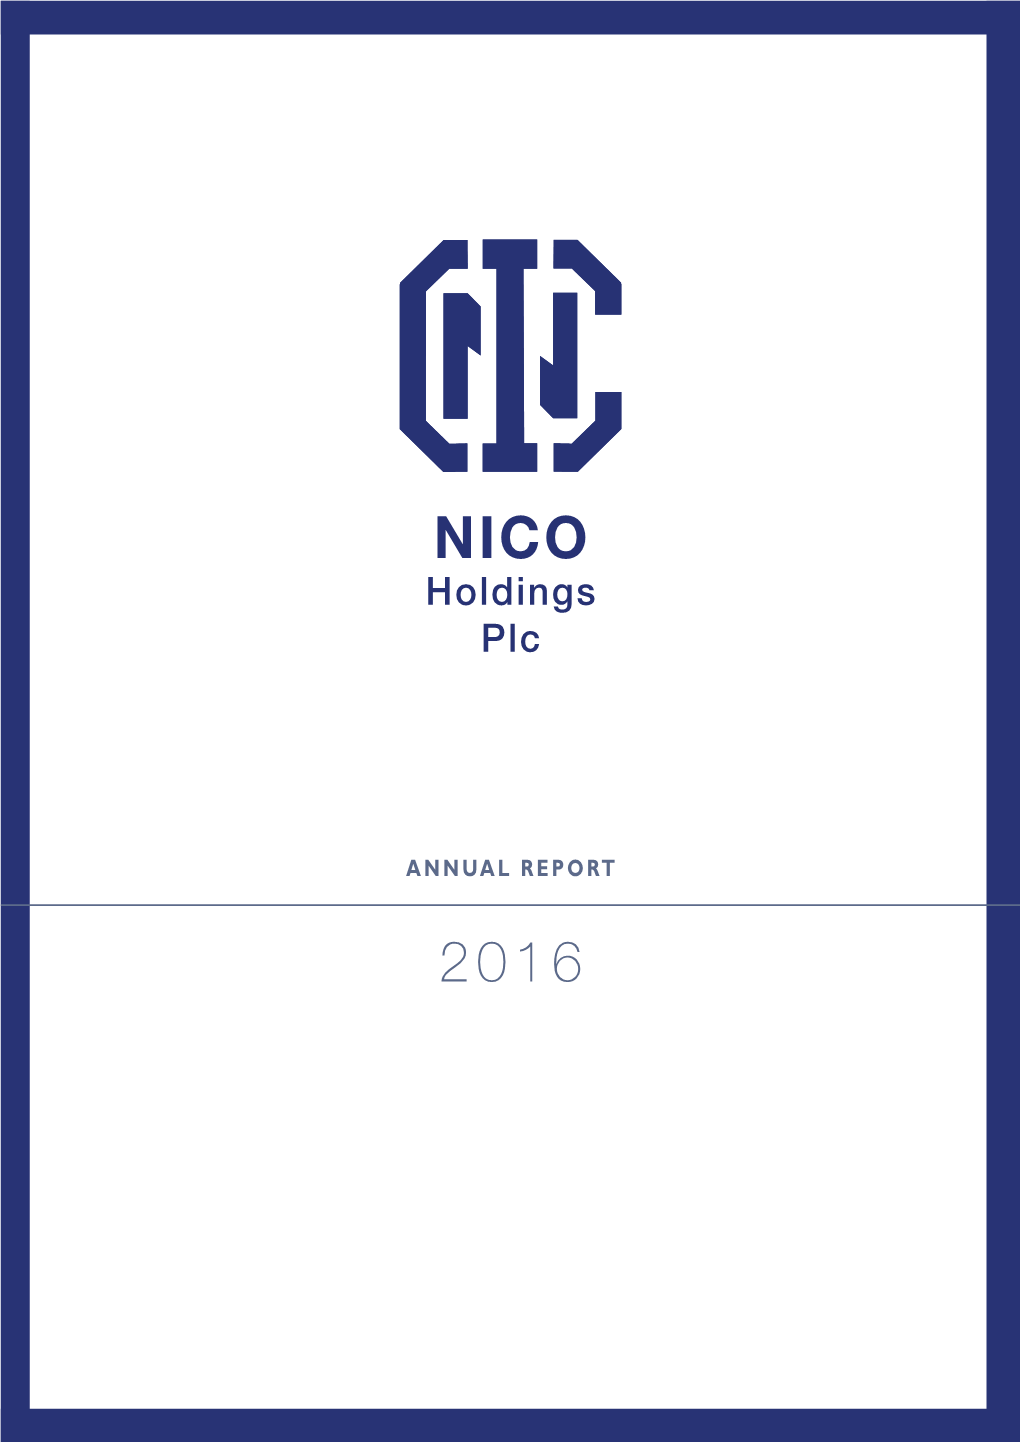 NICO Holdings Plc